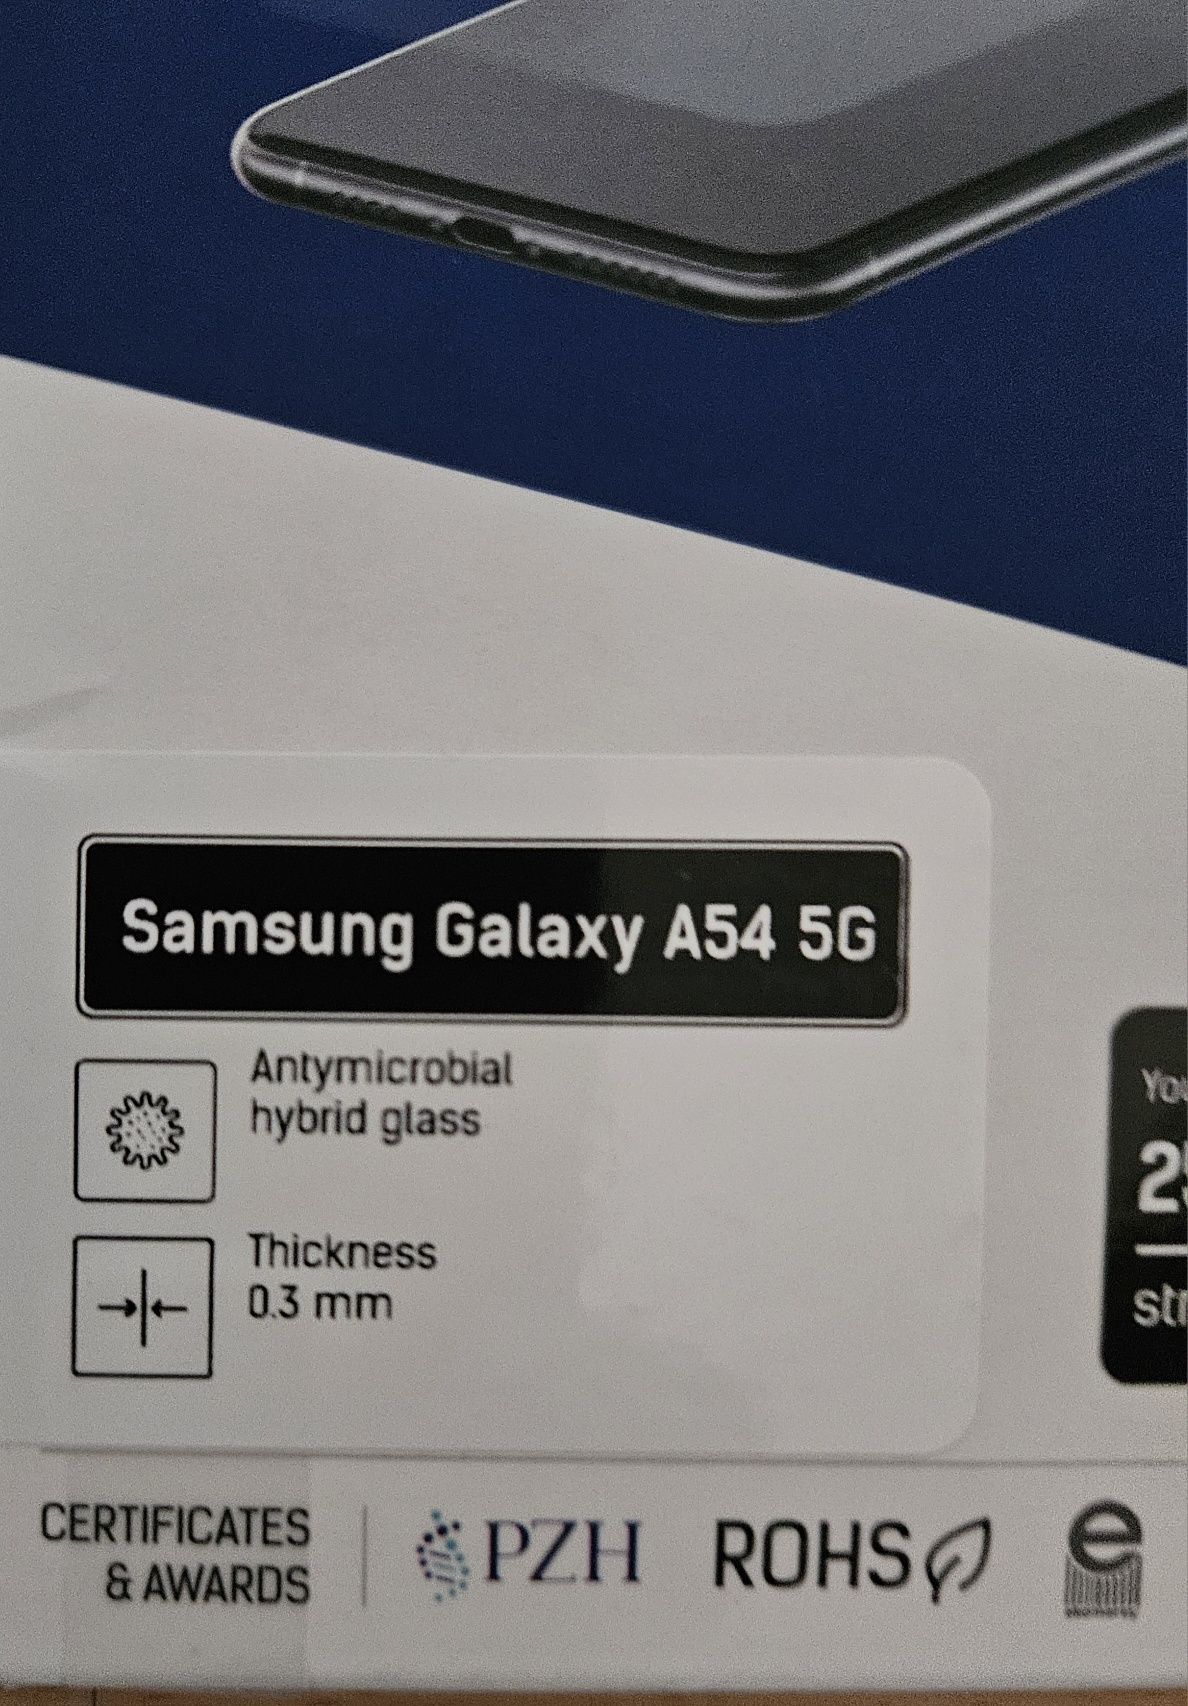 Szkło hybrydowe Samsung Galaxy A54 3MK FlexibleGlass